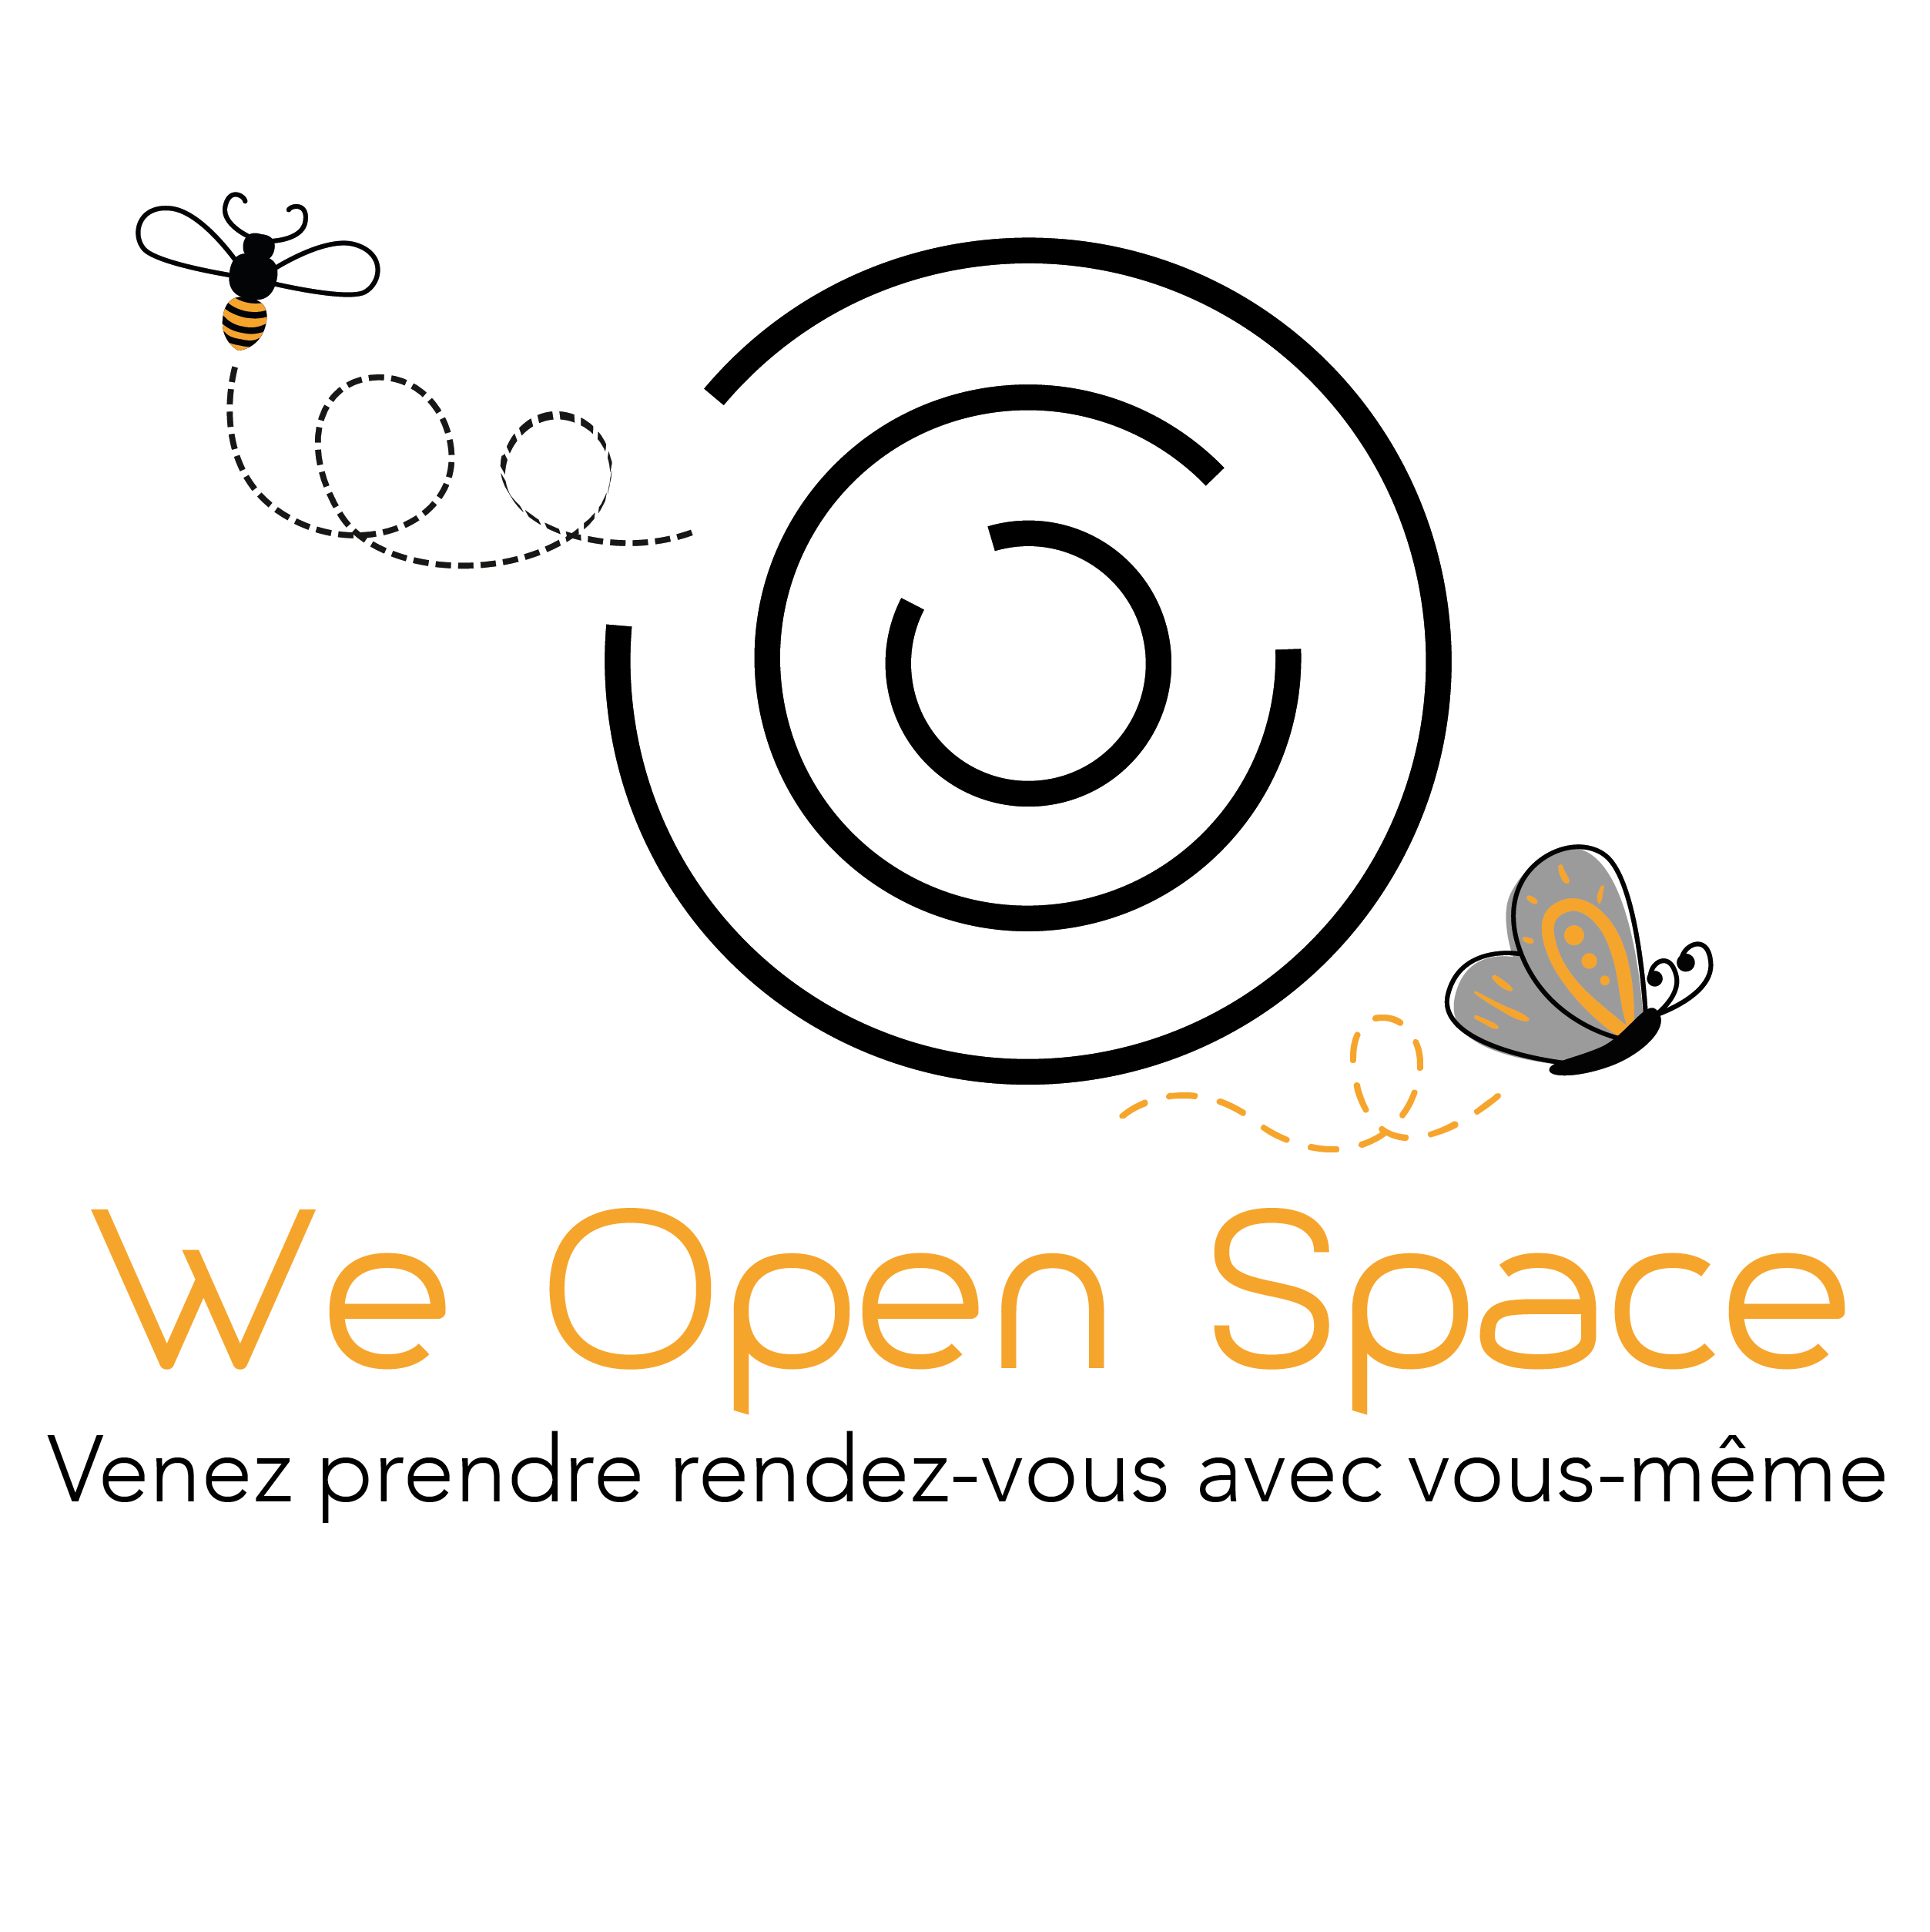 We Open Space logo